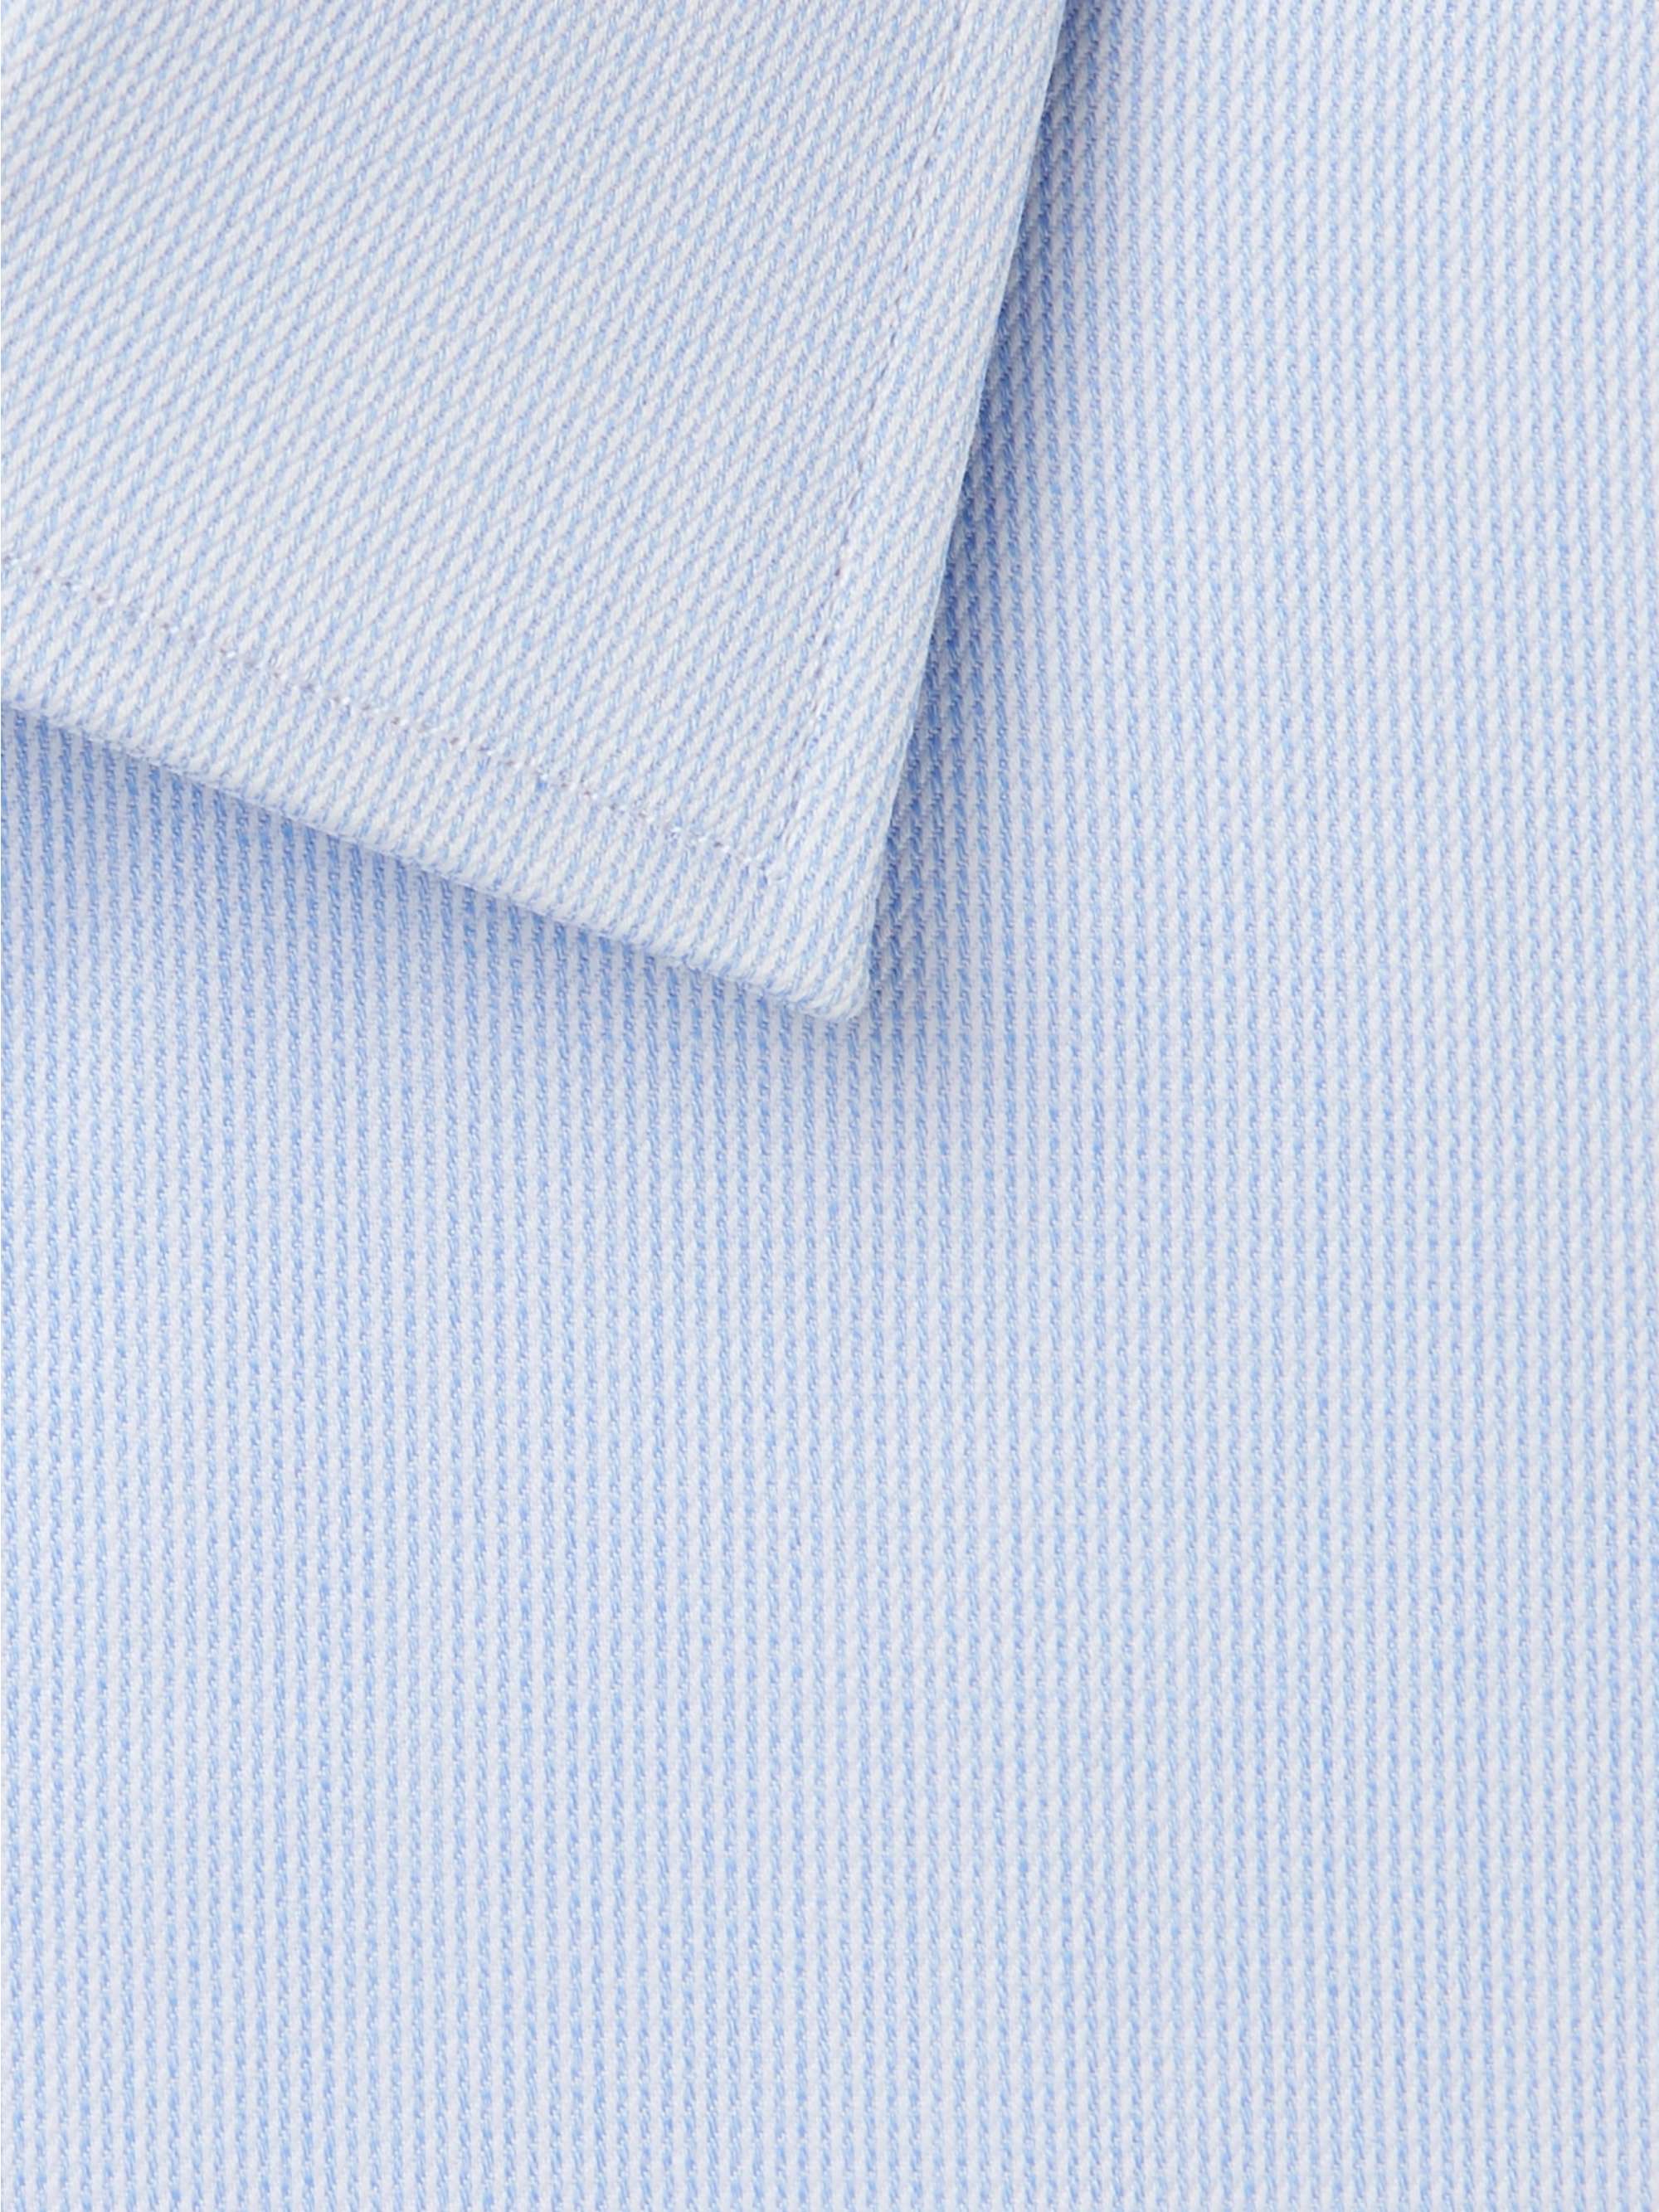 CHARVET Light-Blue Cotton Shirt